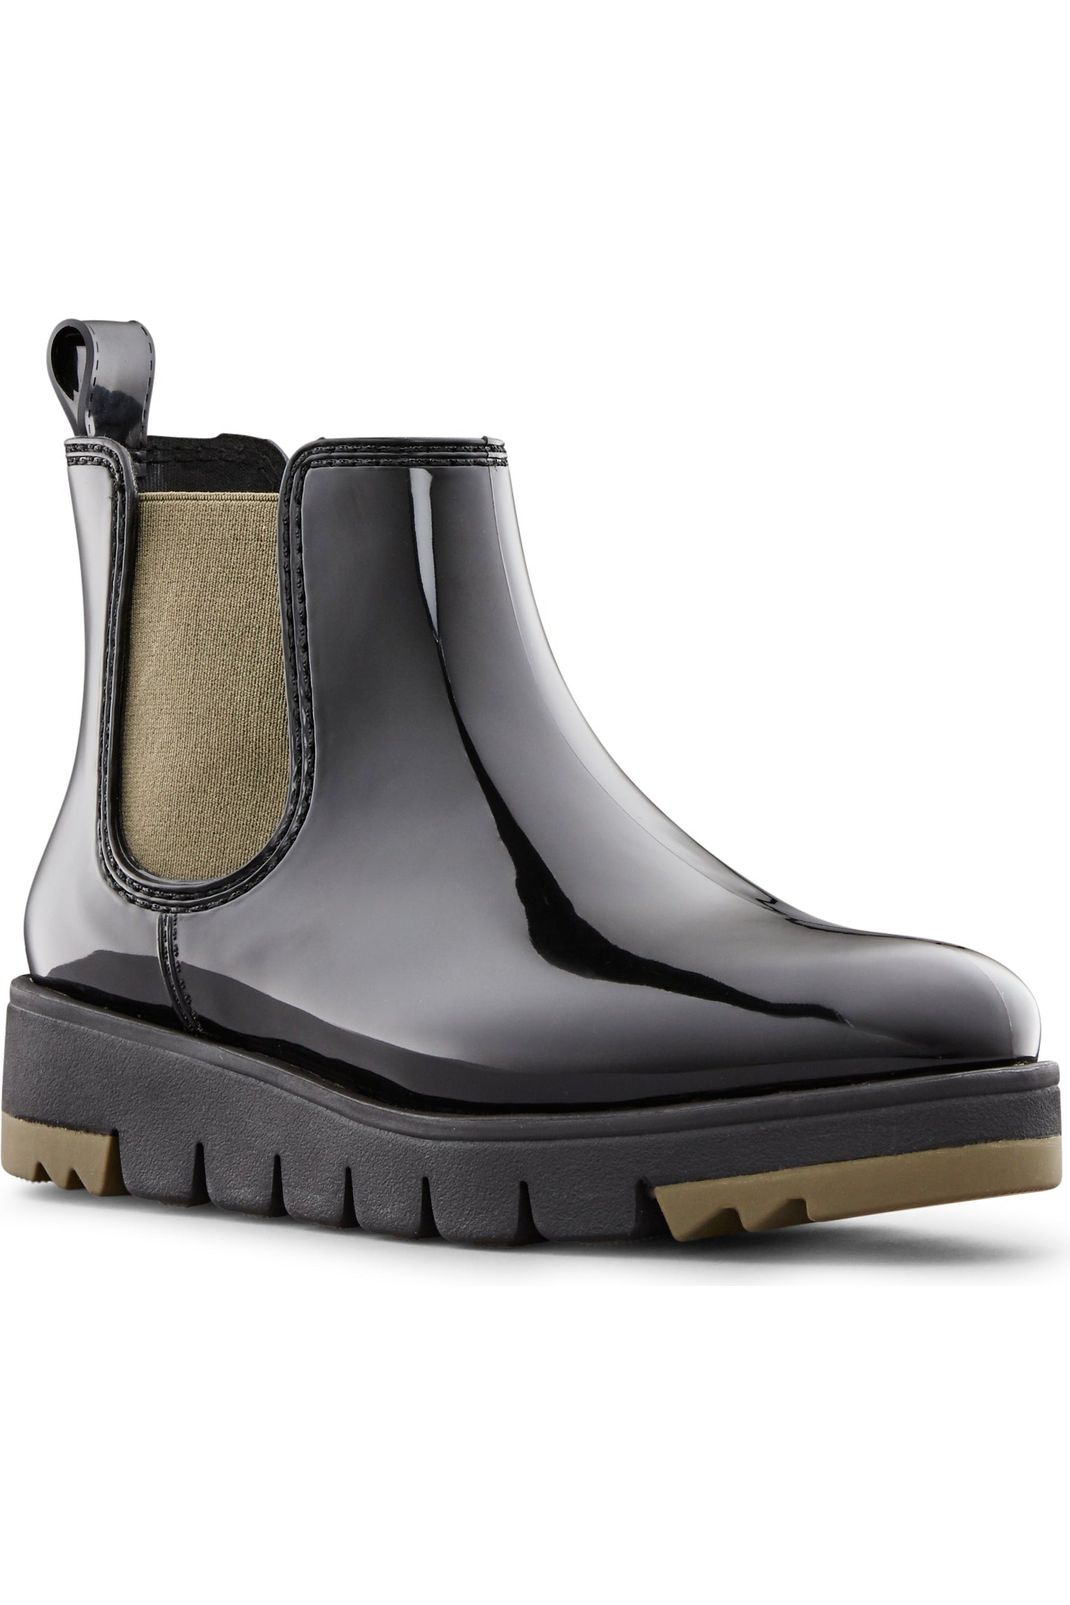  Cougar Chelsea Rain Boot - Style Firenze, angle, black